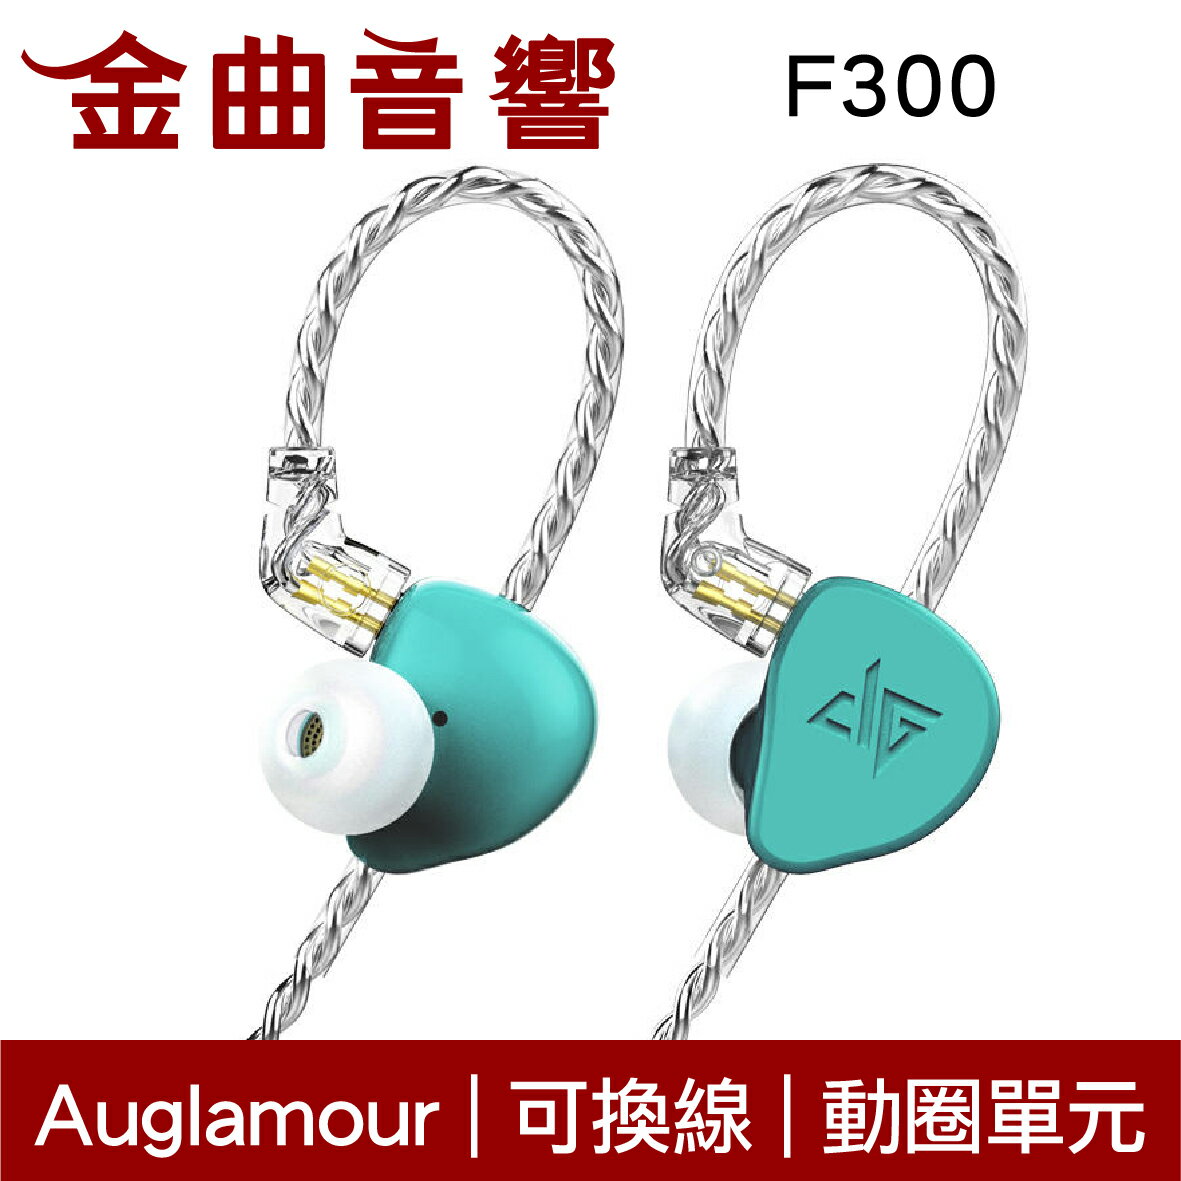 Auglamour 徠聲 F300 黛墨綠 耳道式耳機 可換線 | 金曲音響